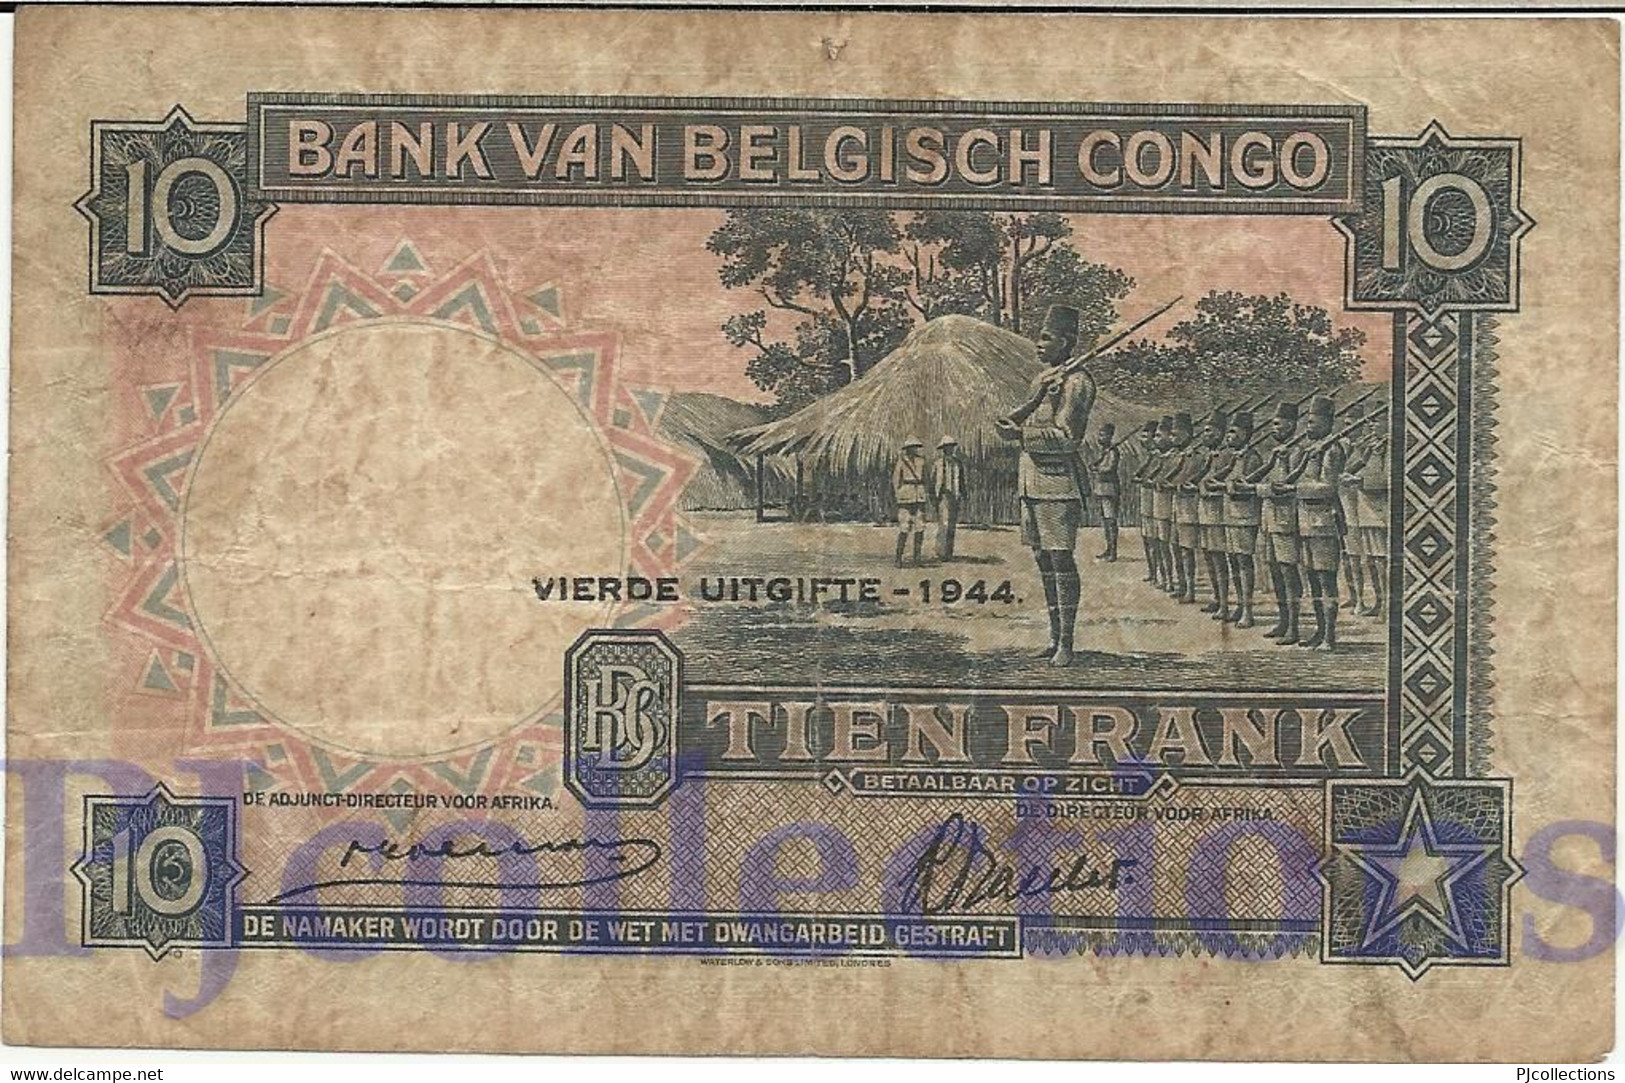 BELGIAN CONGO 10 FRANCS 1944 PICK 14D F+ - Belgian Congo Bank